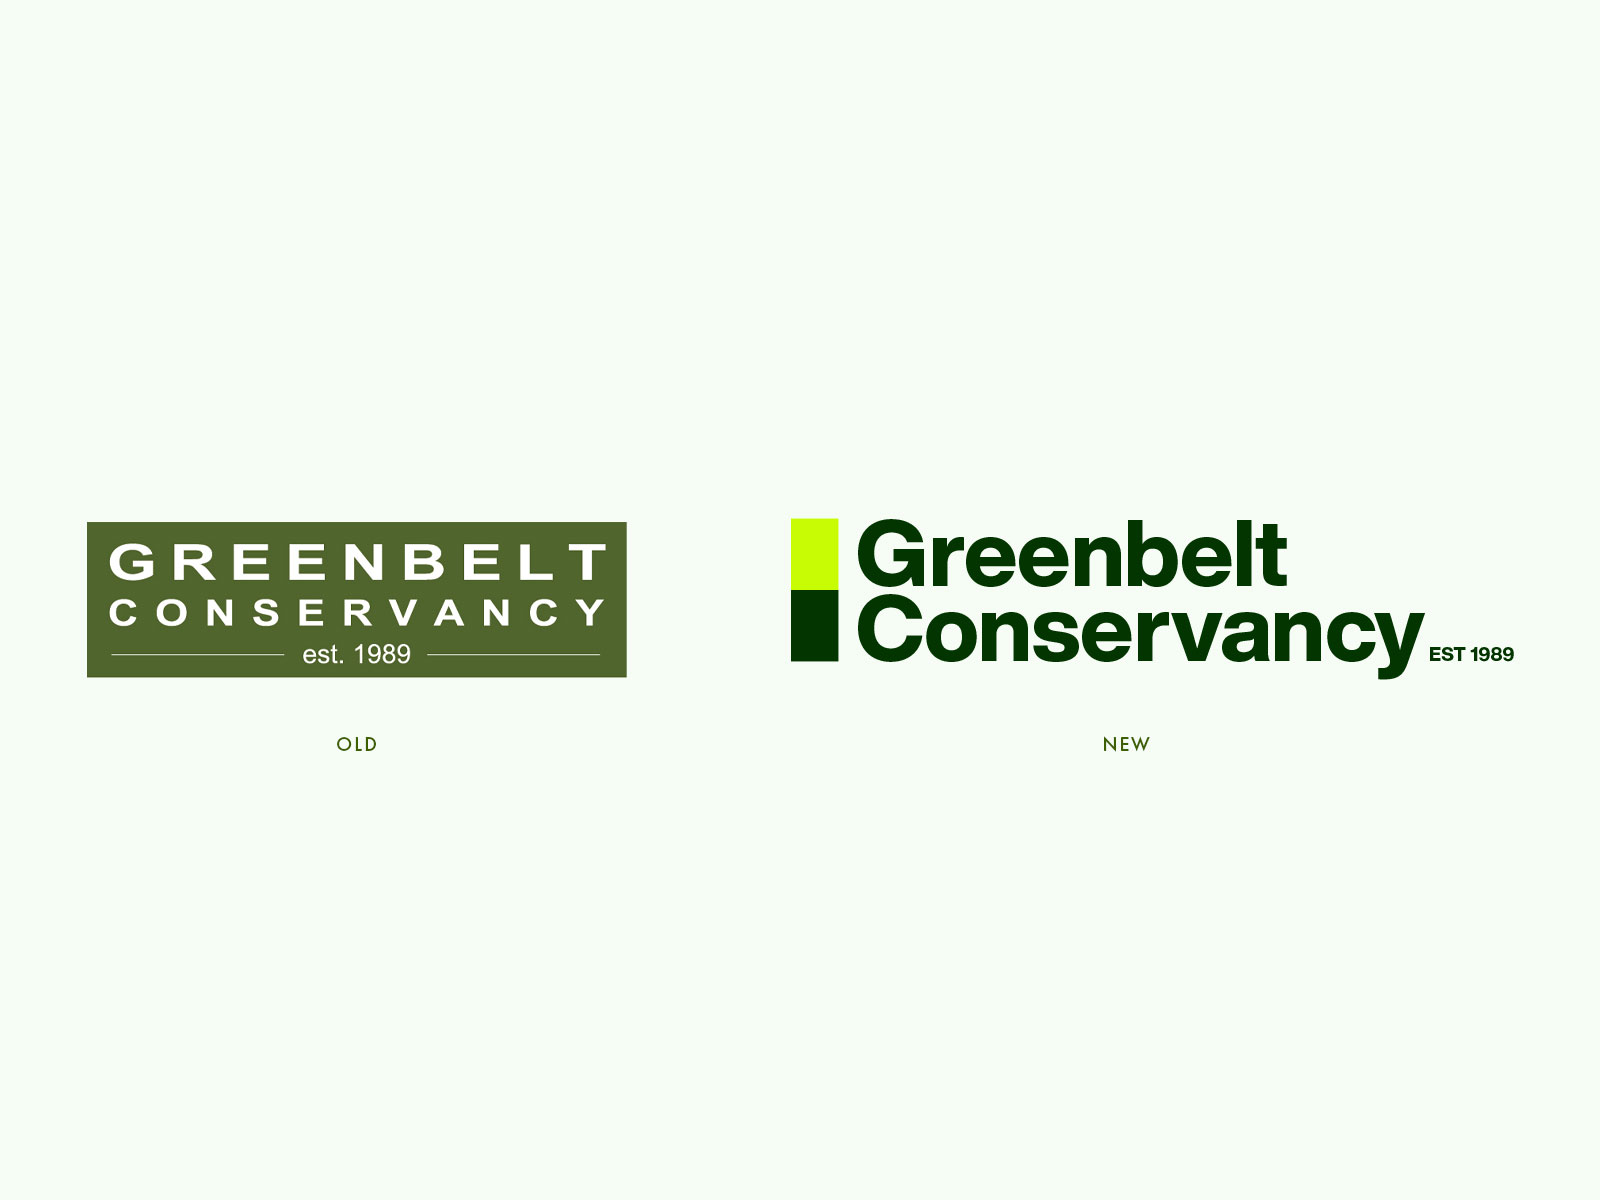 Greenbelt Conservancy rebrand exercise: Logo comparison